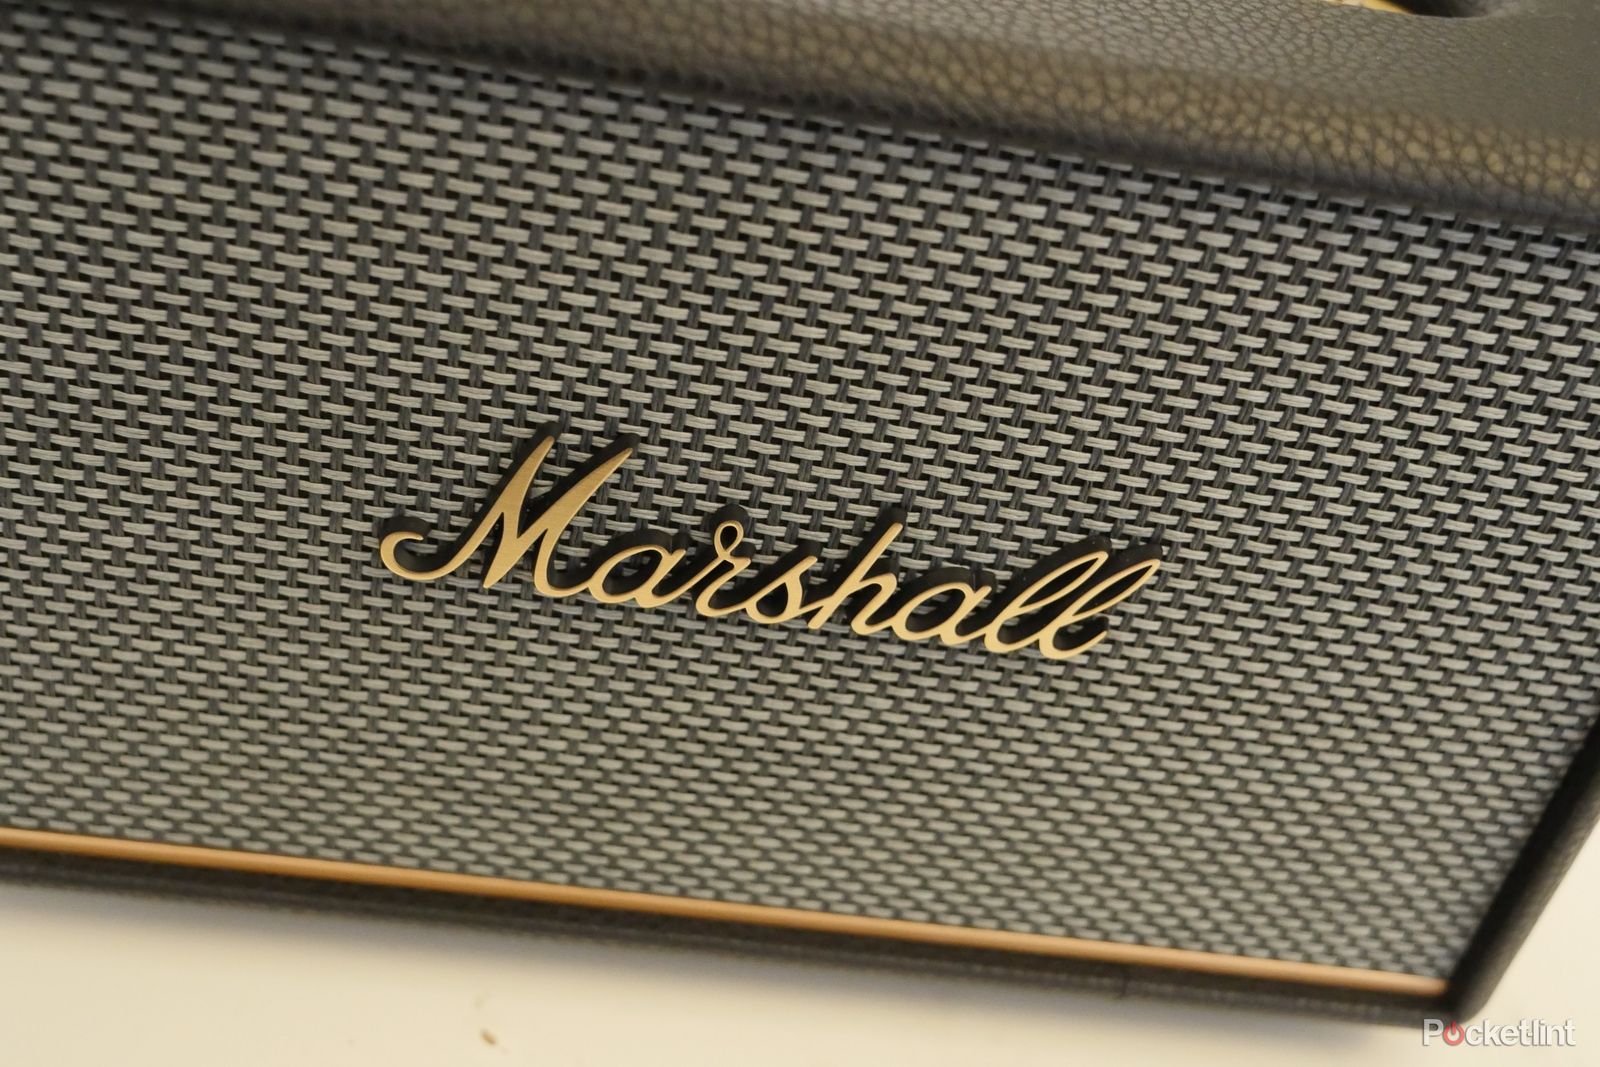 Marshall Acton III Bluetooth Speaker Review